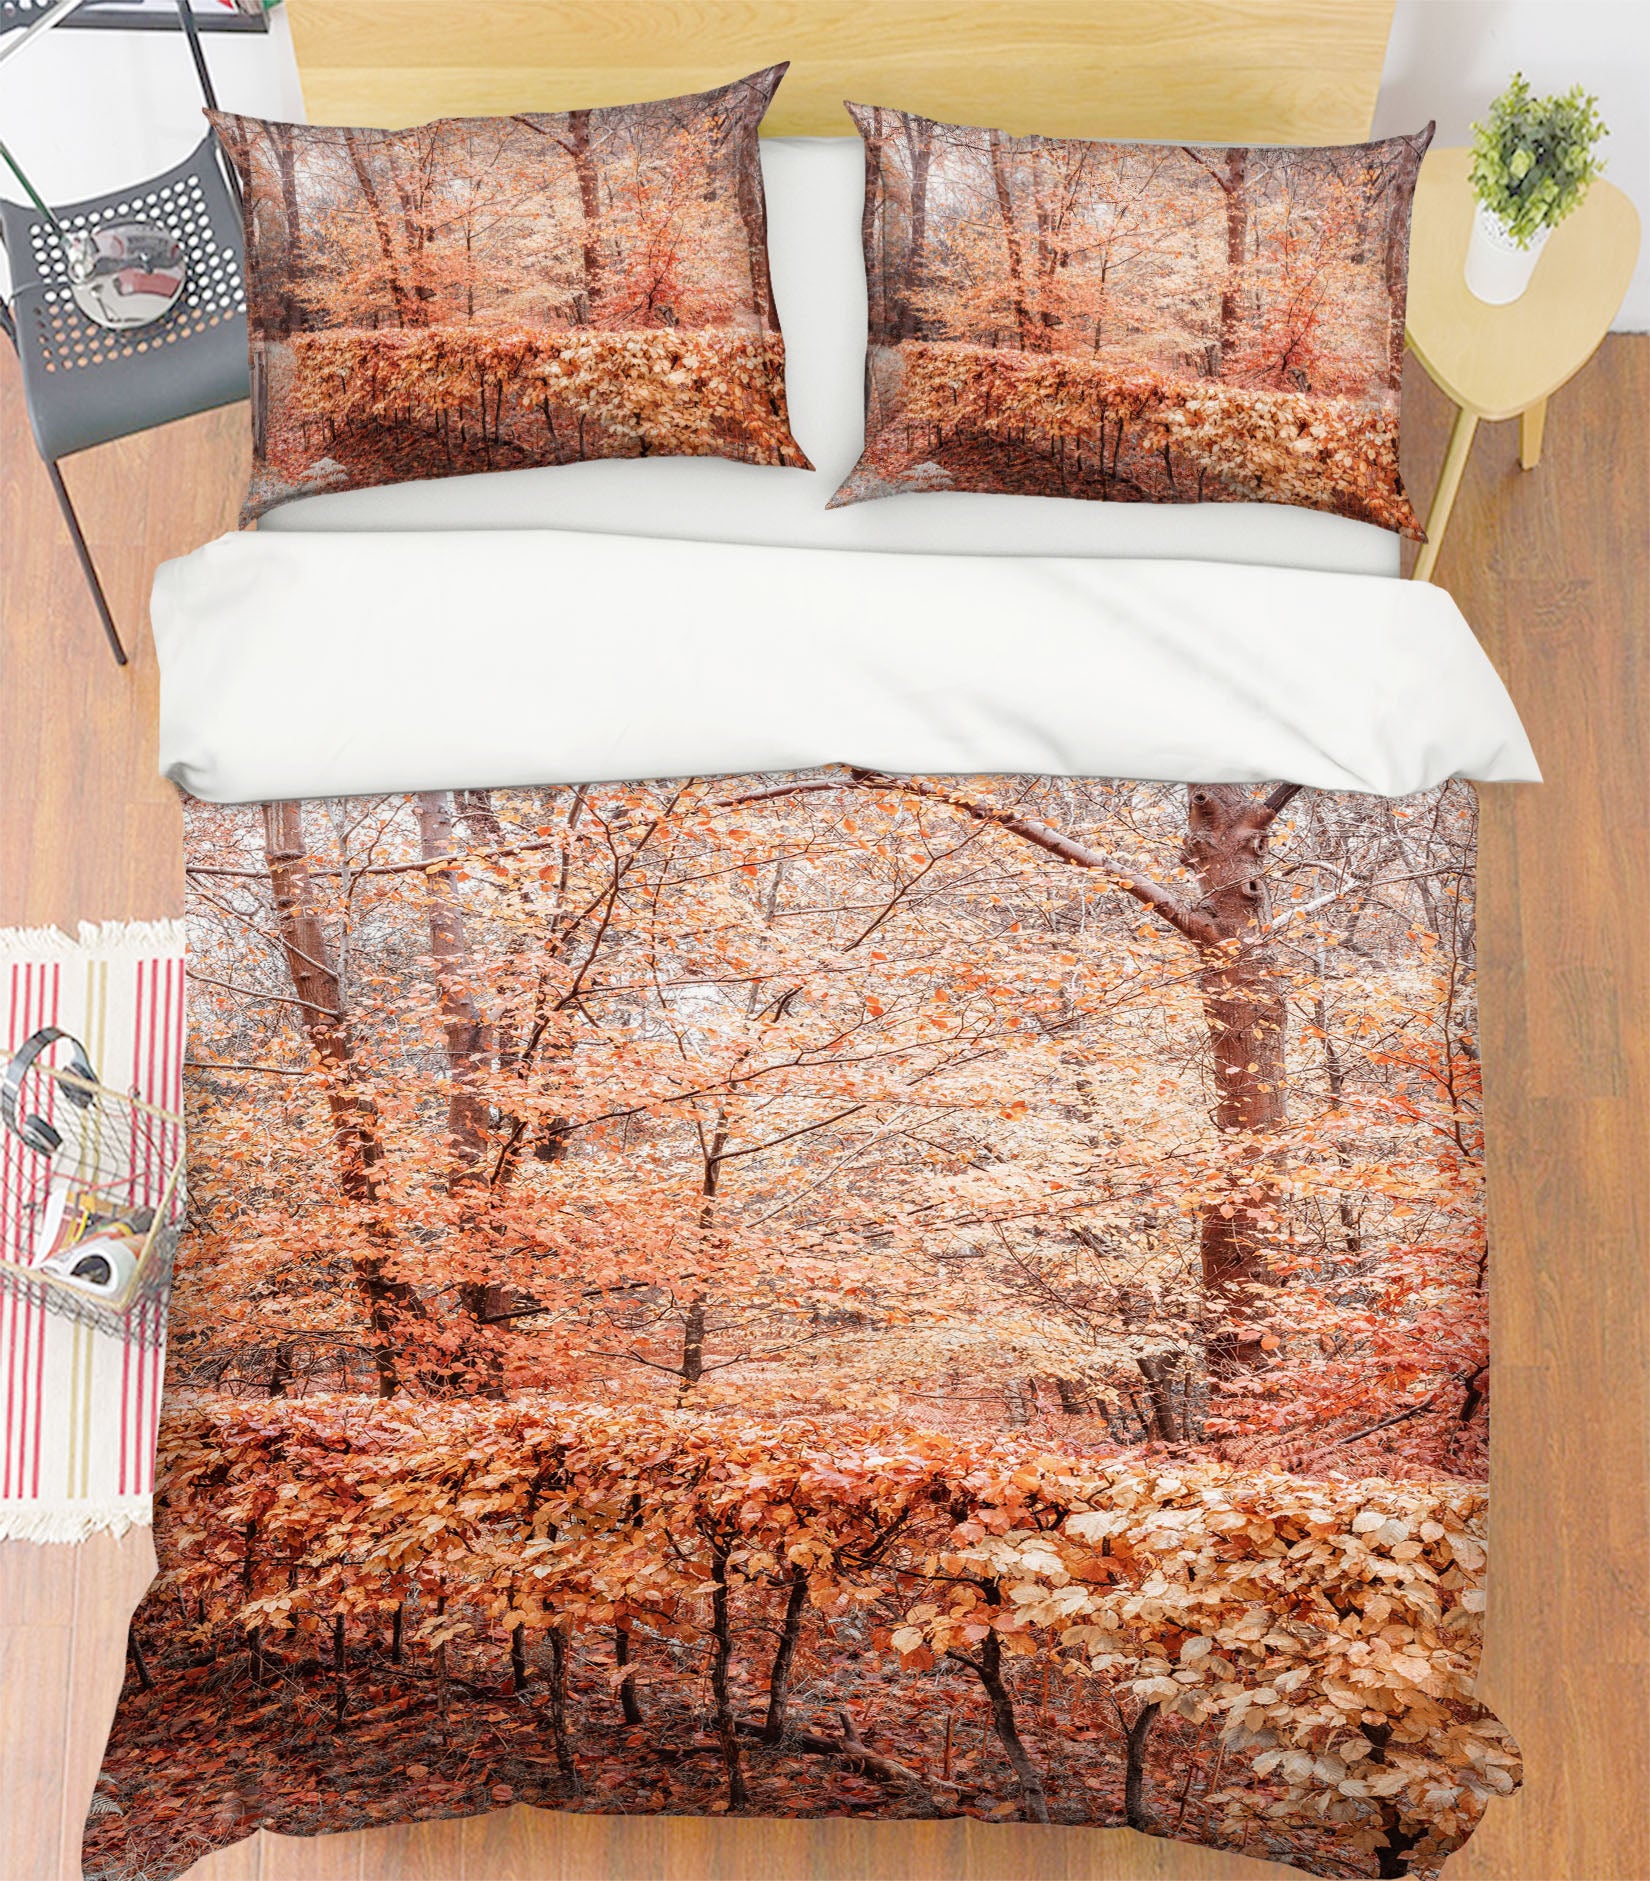 3D Autumn Leaves 7135 Assaf Frank Bedding Bed Pillowcases Quilt Cover Duvet Cover